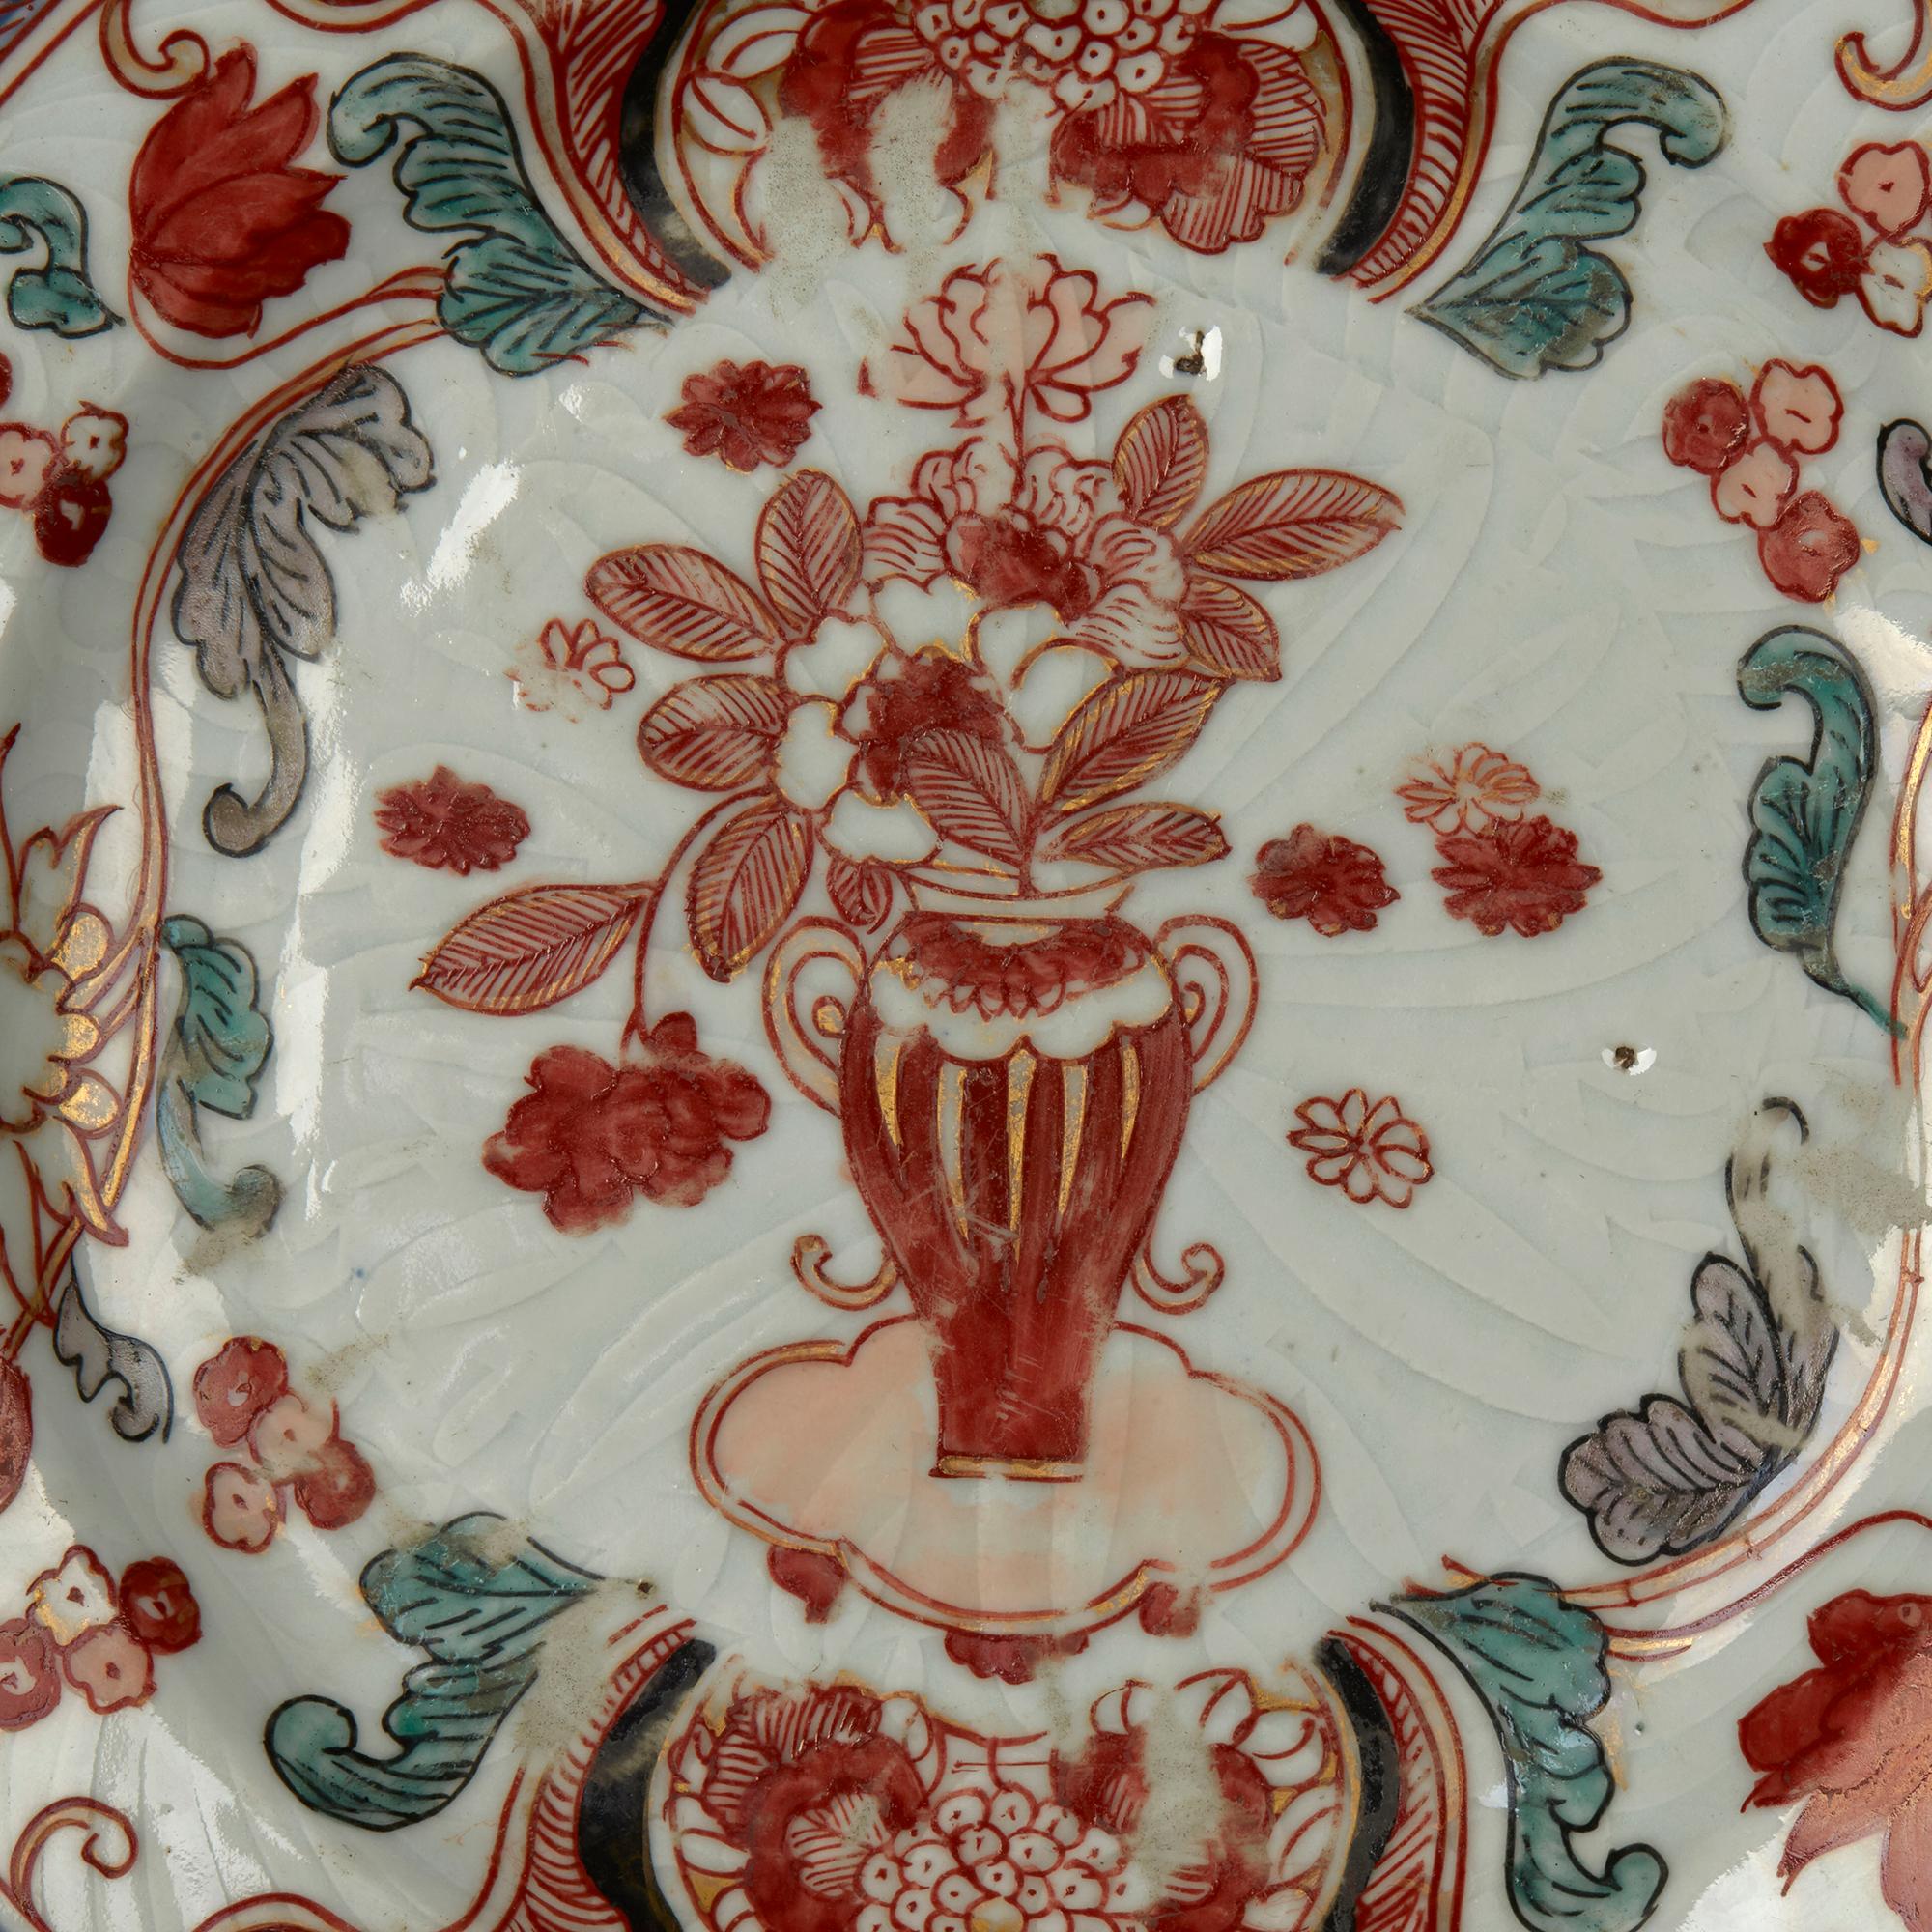 18th century china patterns